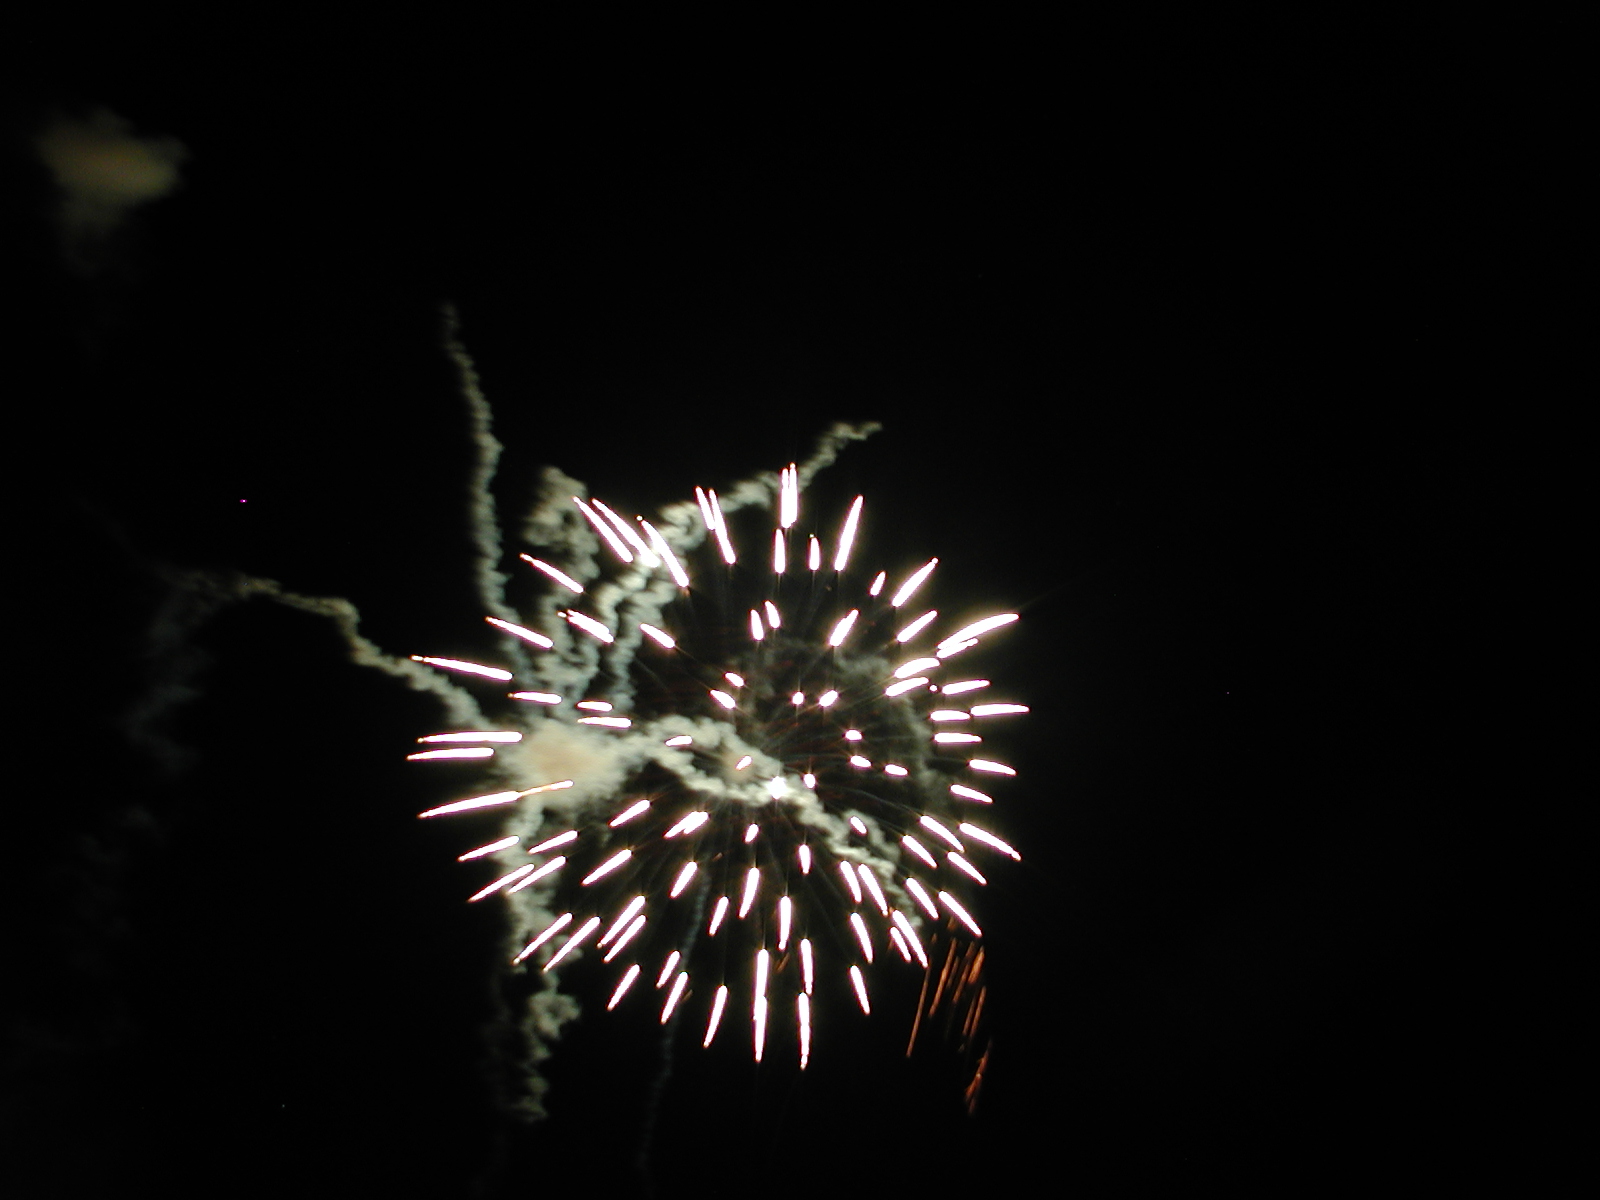 Fireworks #3